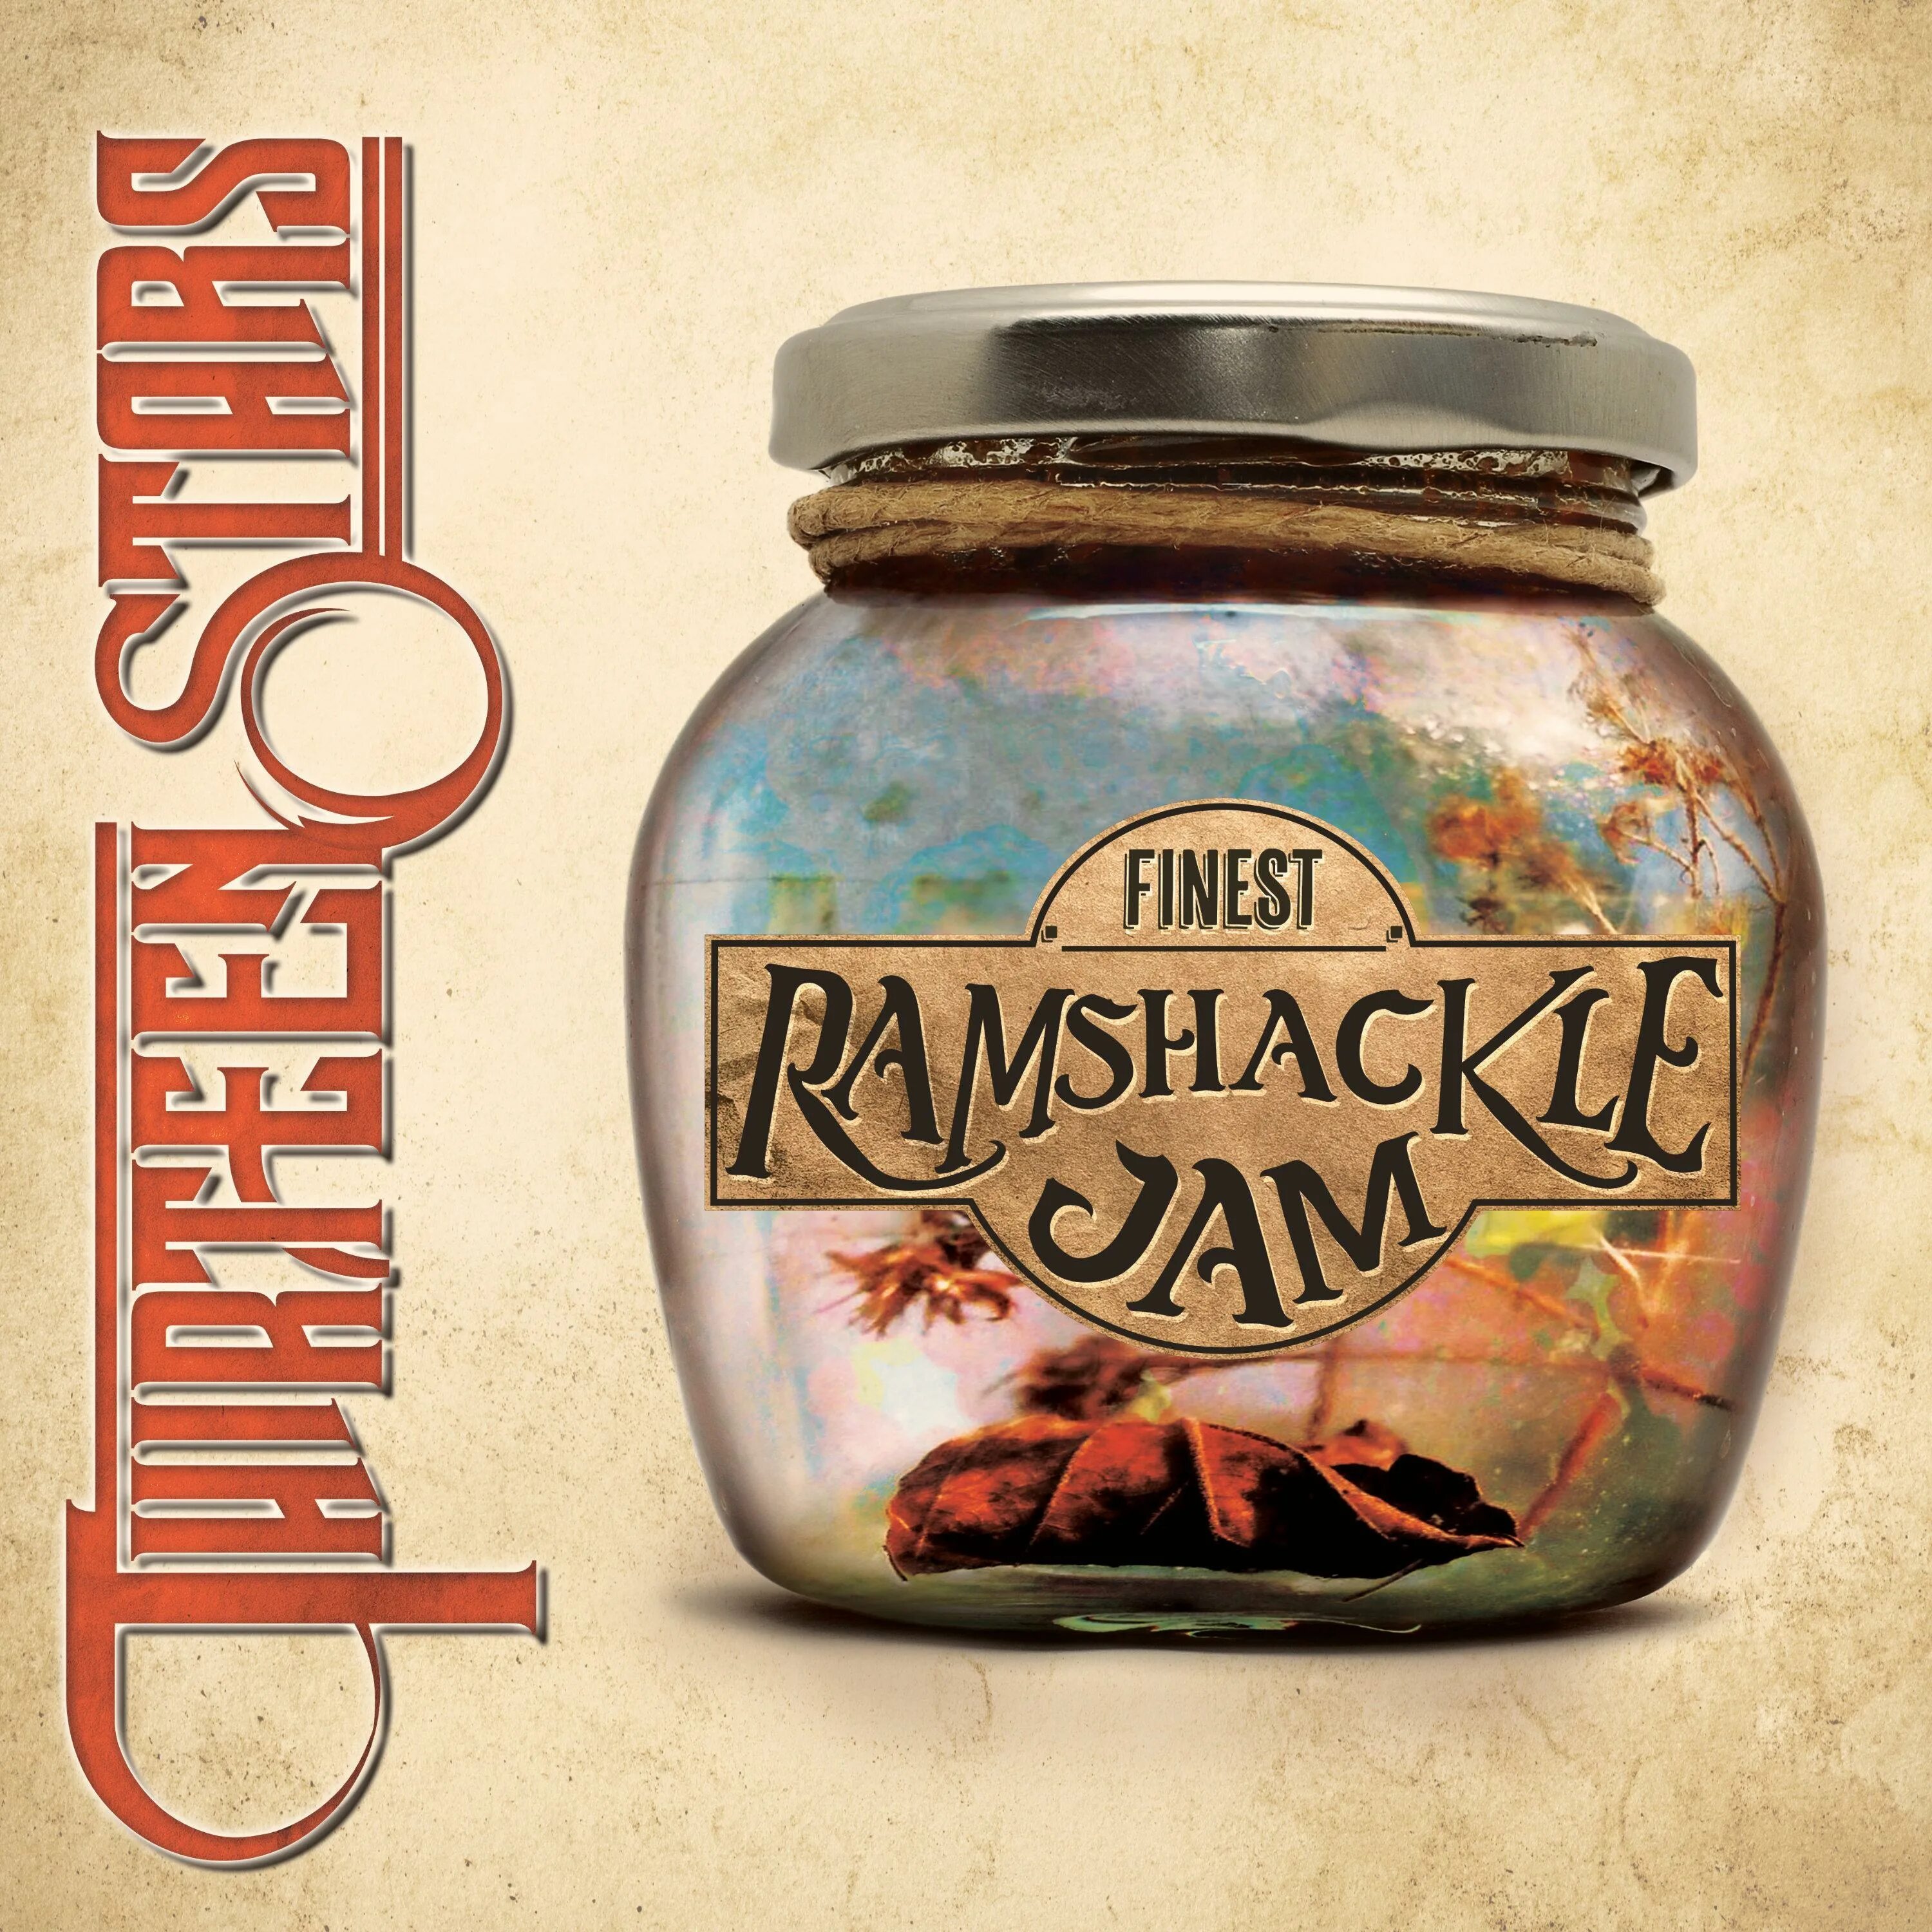 Ramshackle фанфики. Thirteen Stars - Finest ramshackle Jam (2020). Ramshackle. Дич из ramshackle. Ramshackle группа.